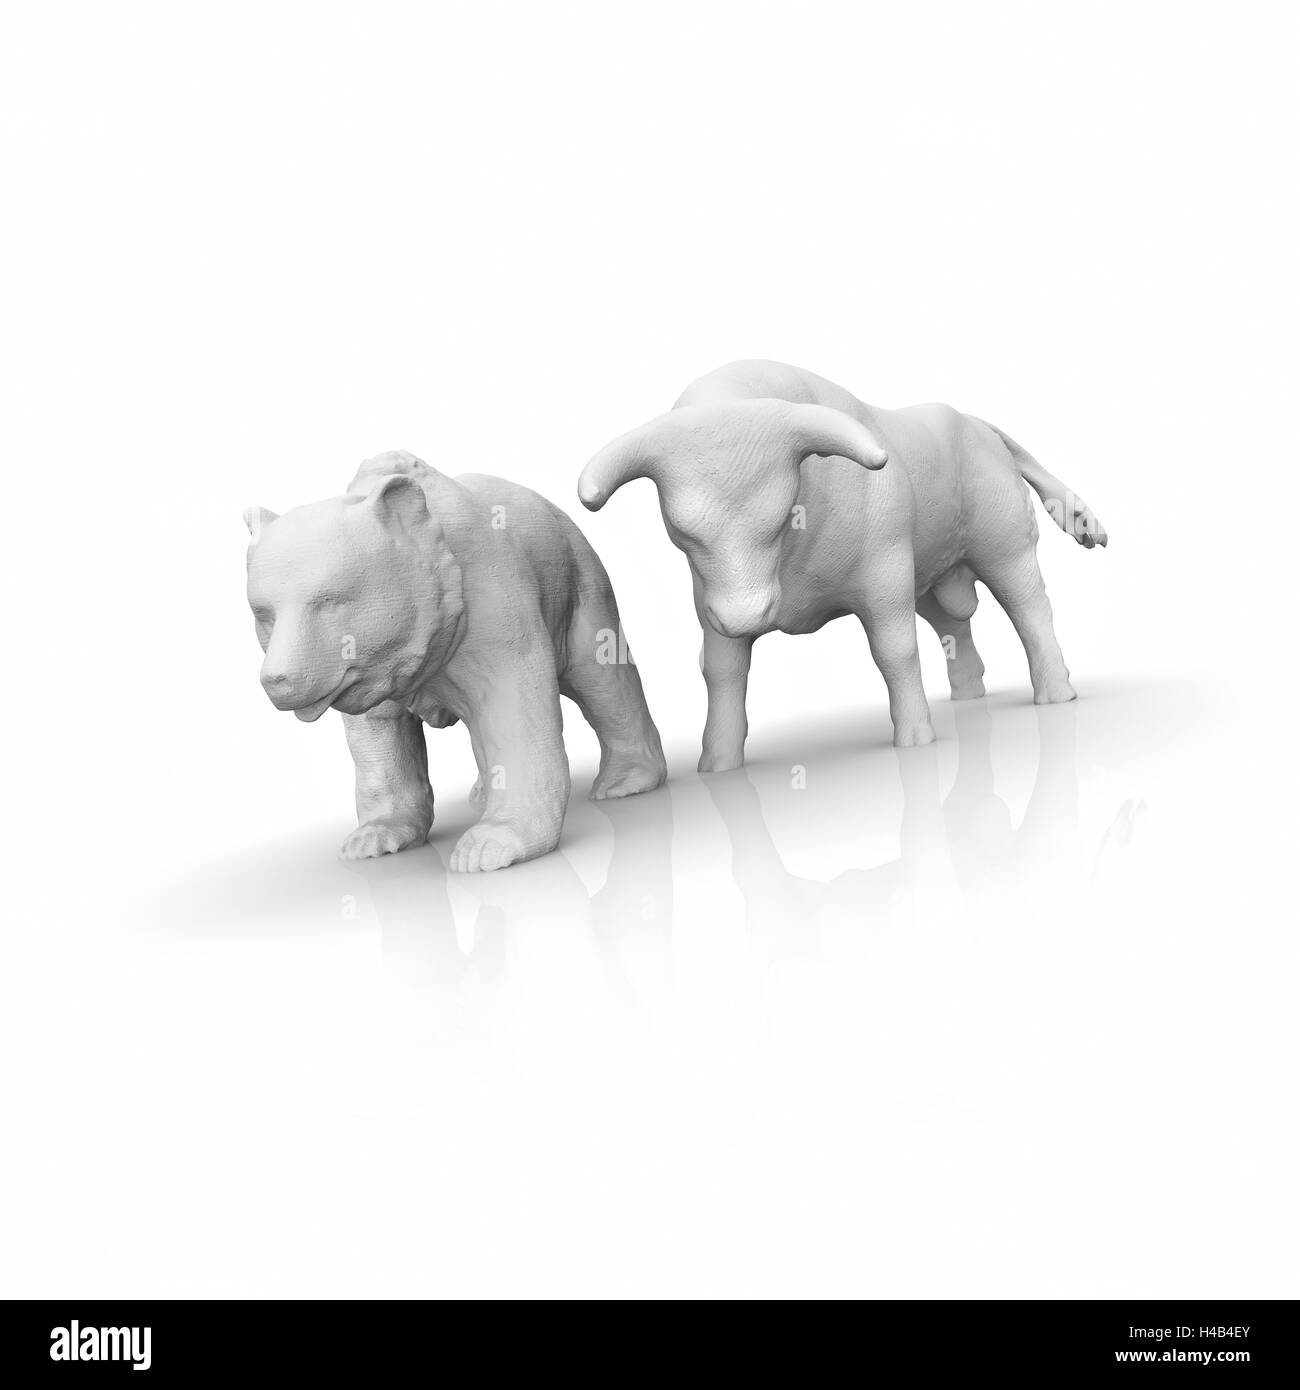 Bull and bear, background white, Stock Photo